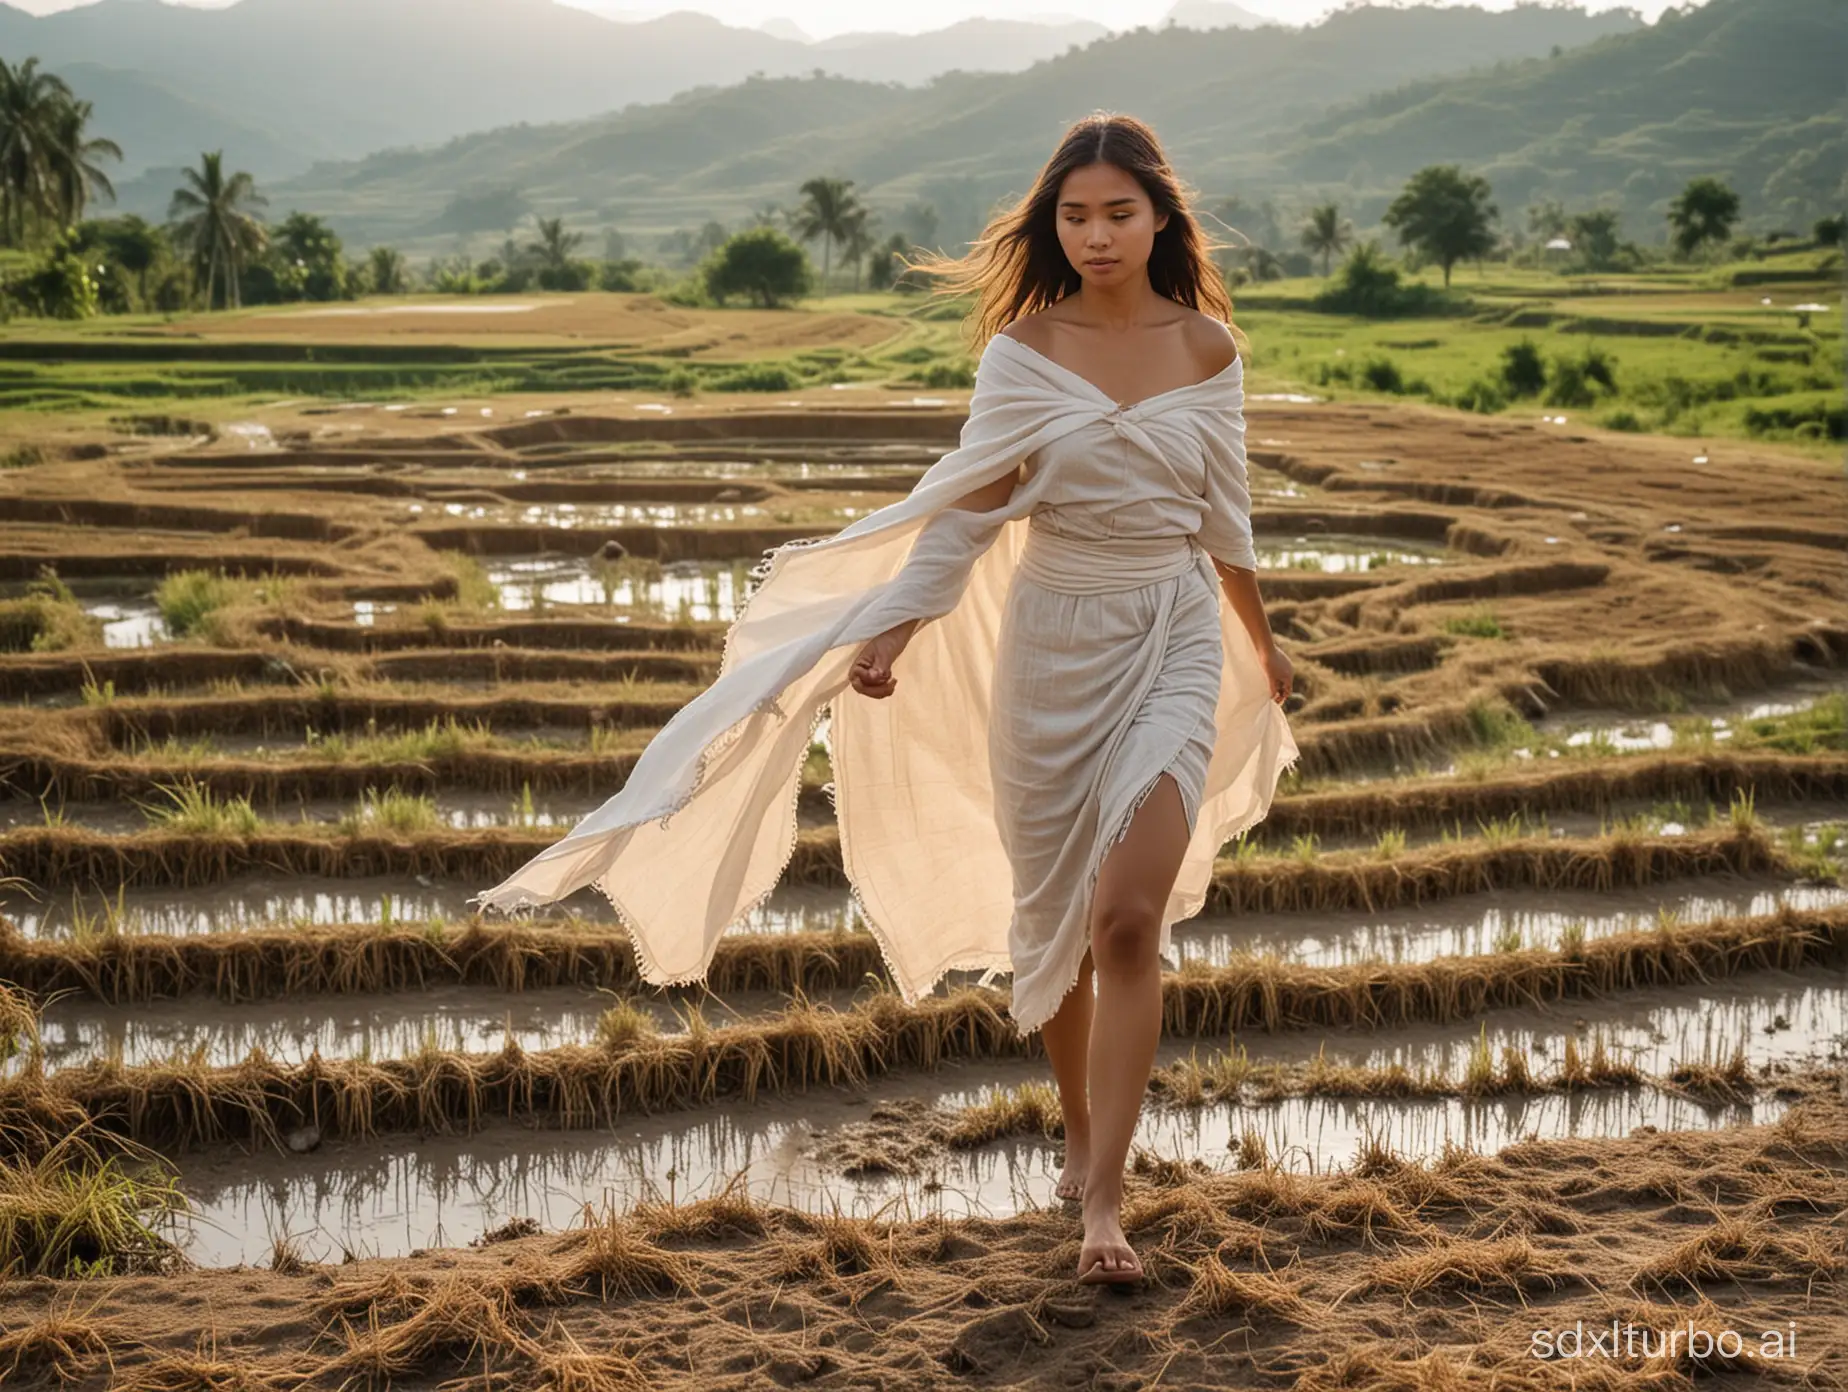 Filipina-Woman-Walking-on-Rice-Field-Terrace-in-Medieval-Setting